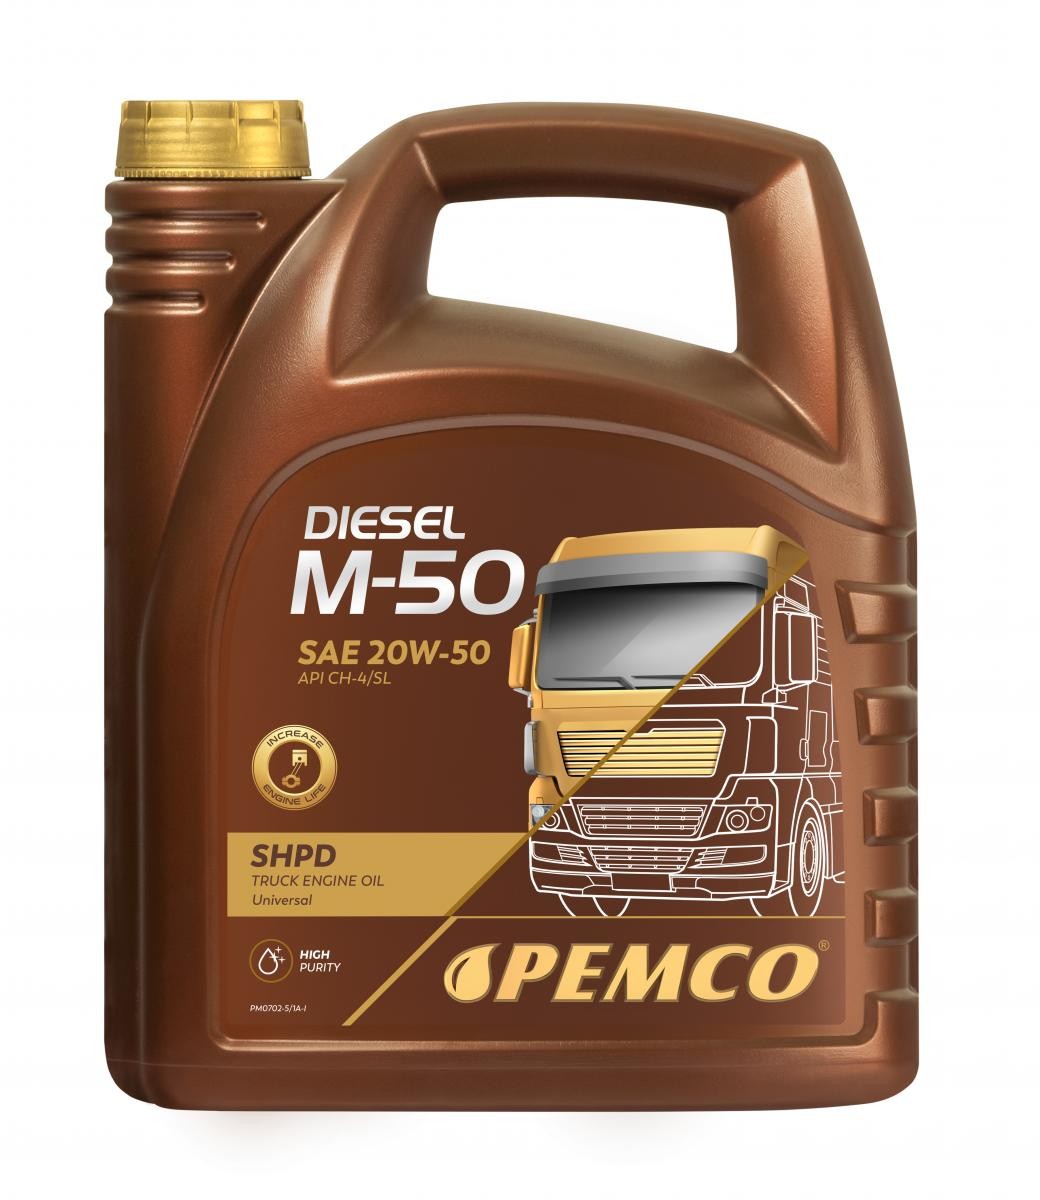 Comprar Aceite motor PEMCO PM0702-5 Truck SHPD, DIESEL M-50 SHPD 20W-50, 5L, Aceite mineral